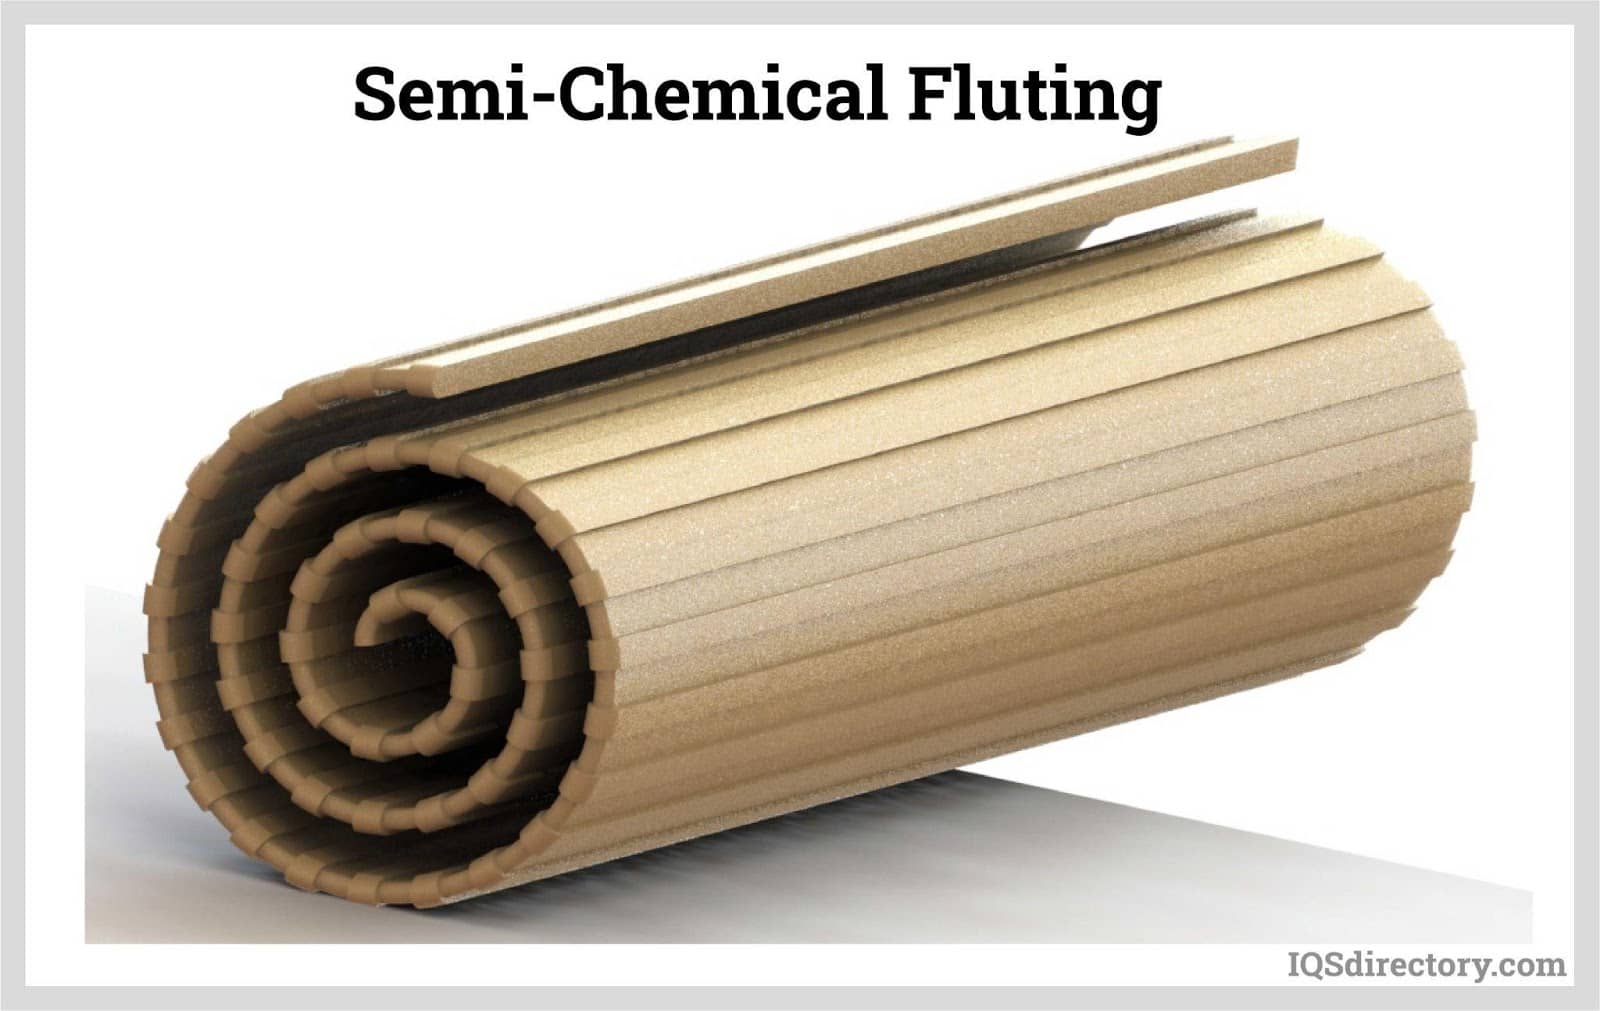 Semi-Chemical Fluting